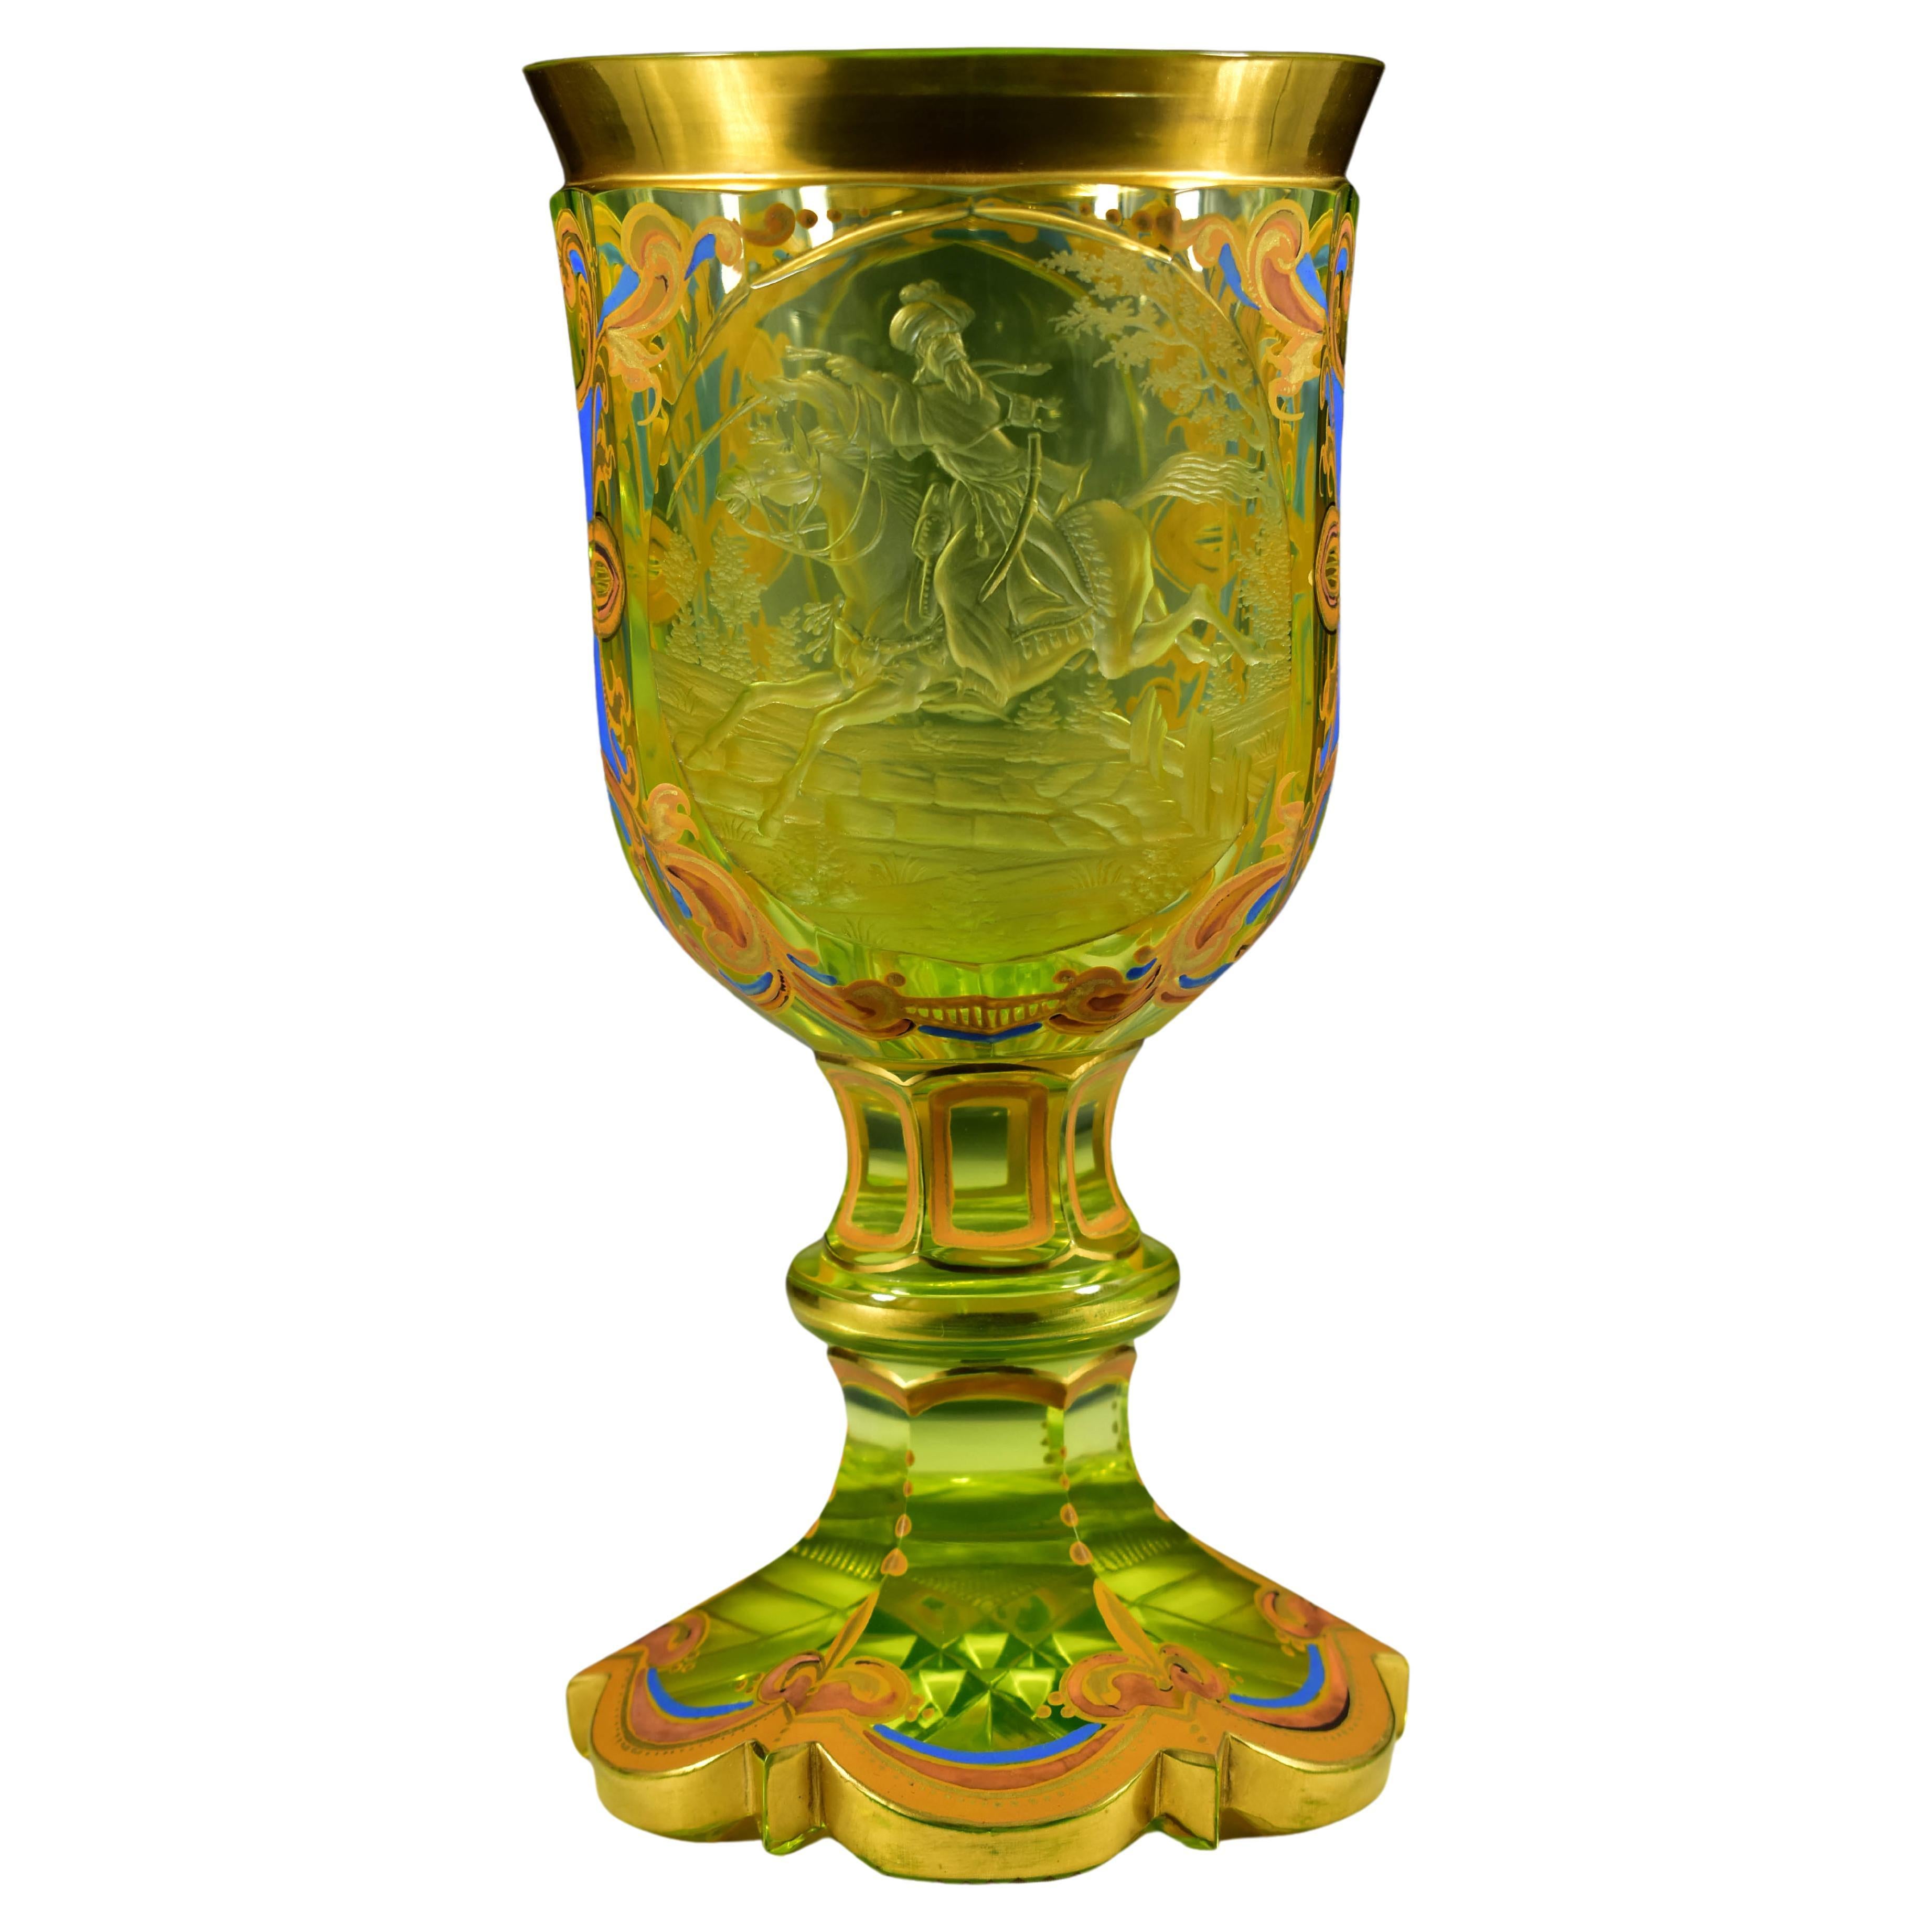 Engraved Painted Goblet -  Uranium glass - Bohemian glass 19-20 centuries